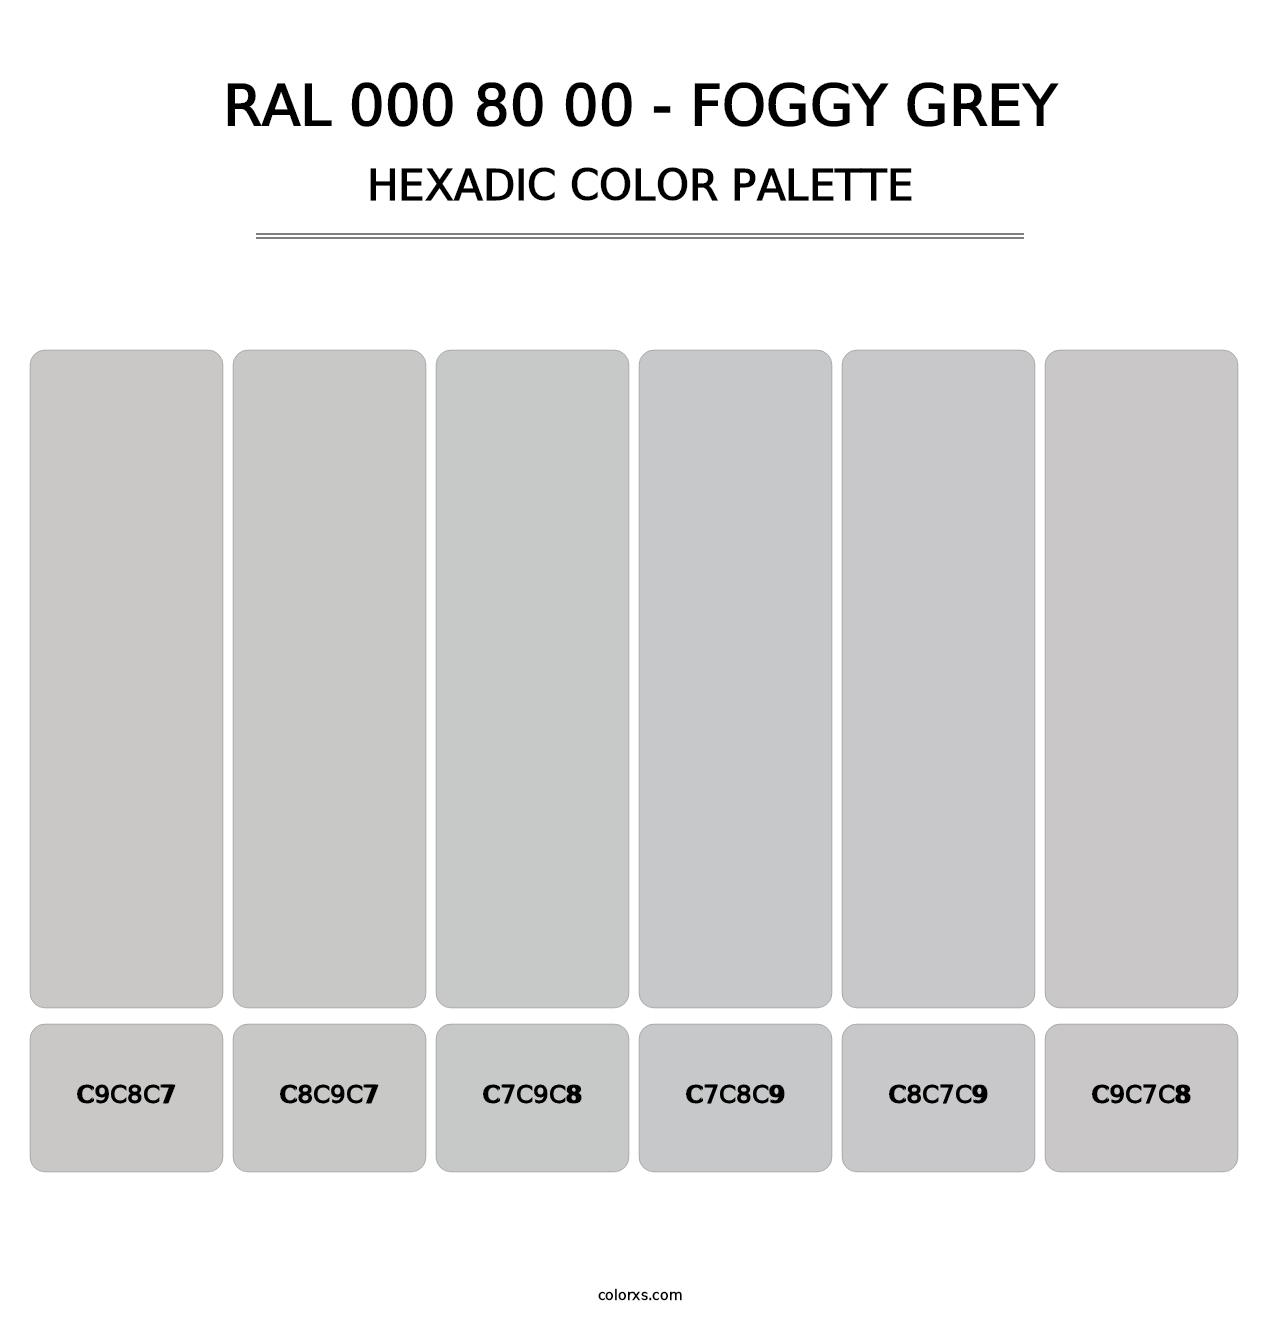 RAL 000 80 00 - Foggy Grey - Hexadic Color Palette